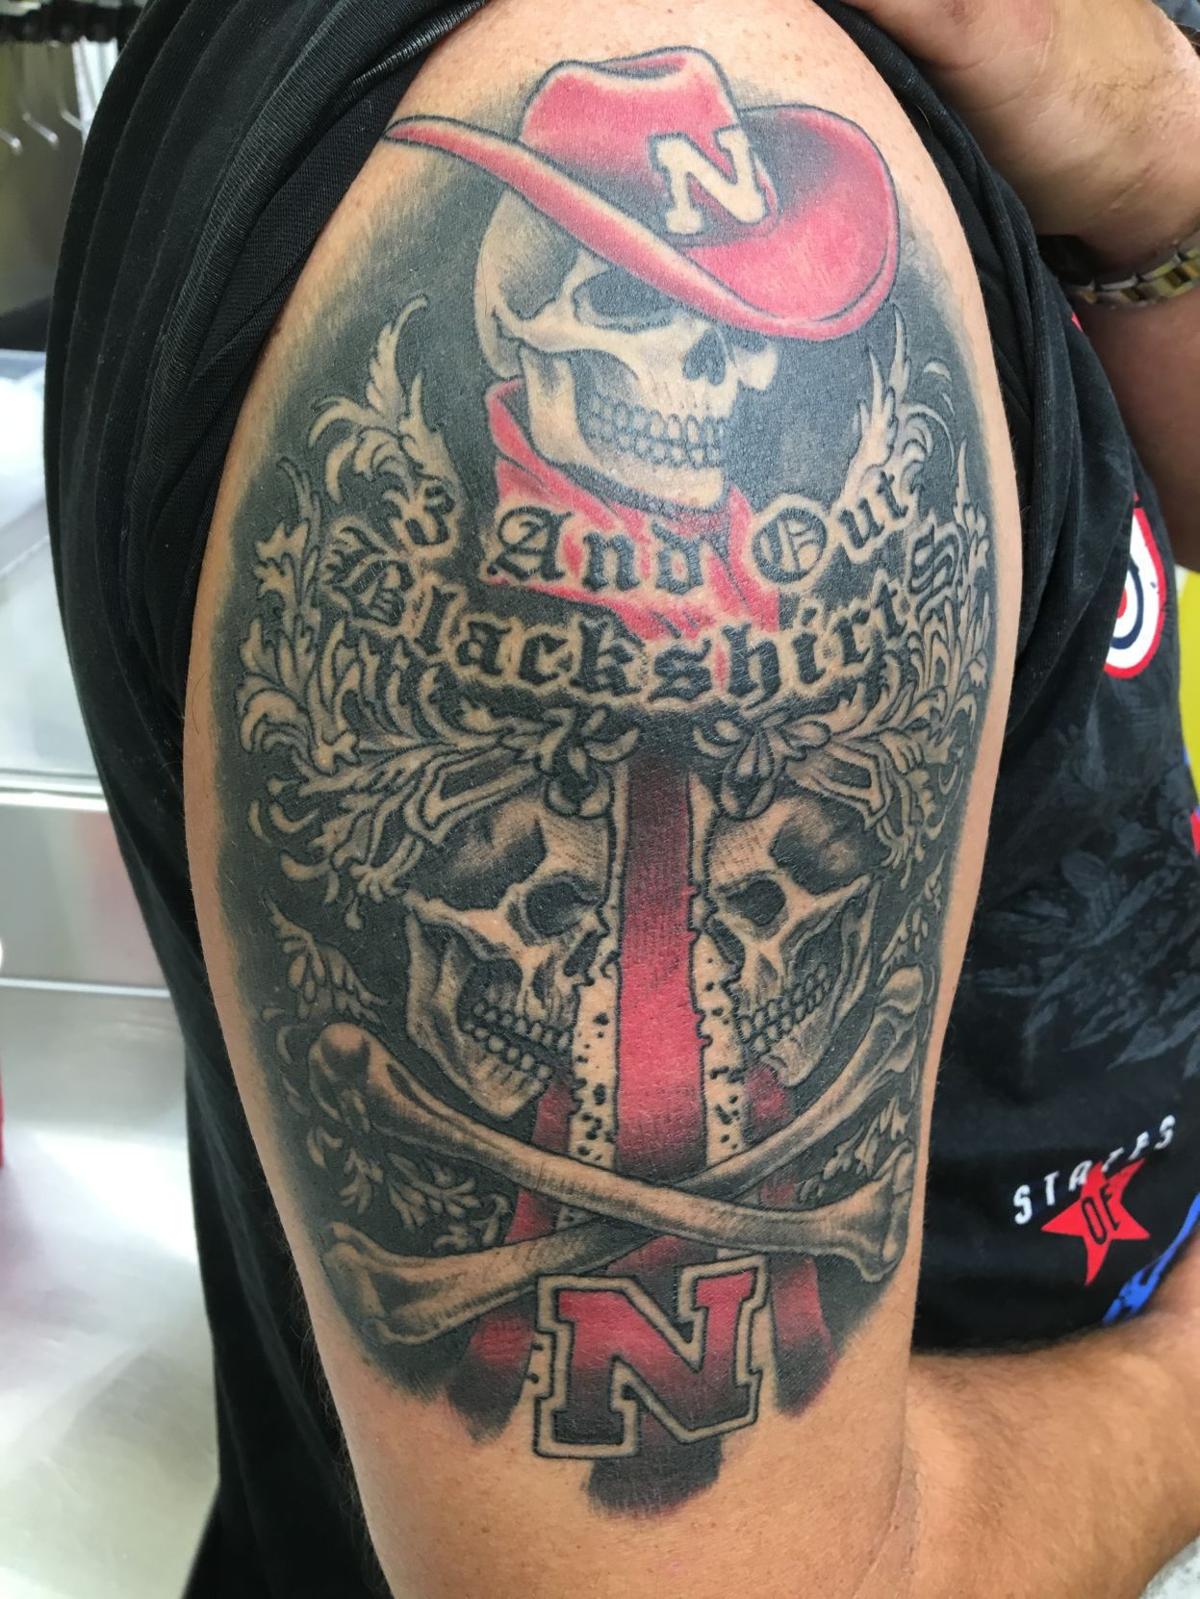 Husker ink: Nebraska fans show their love with tattoos | Husker Extra